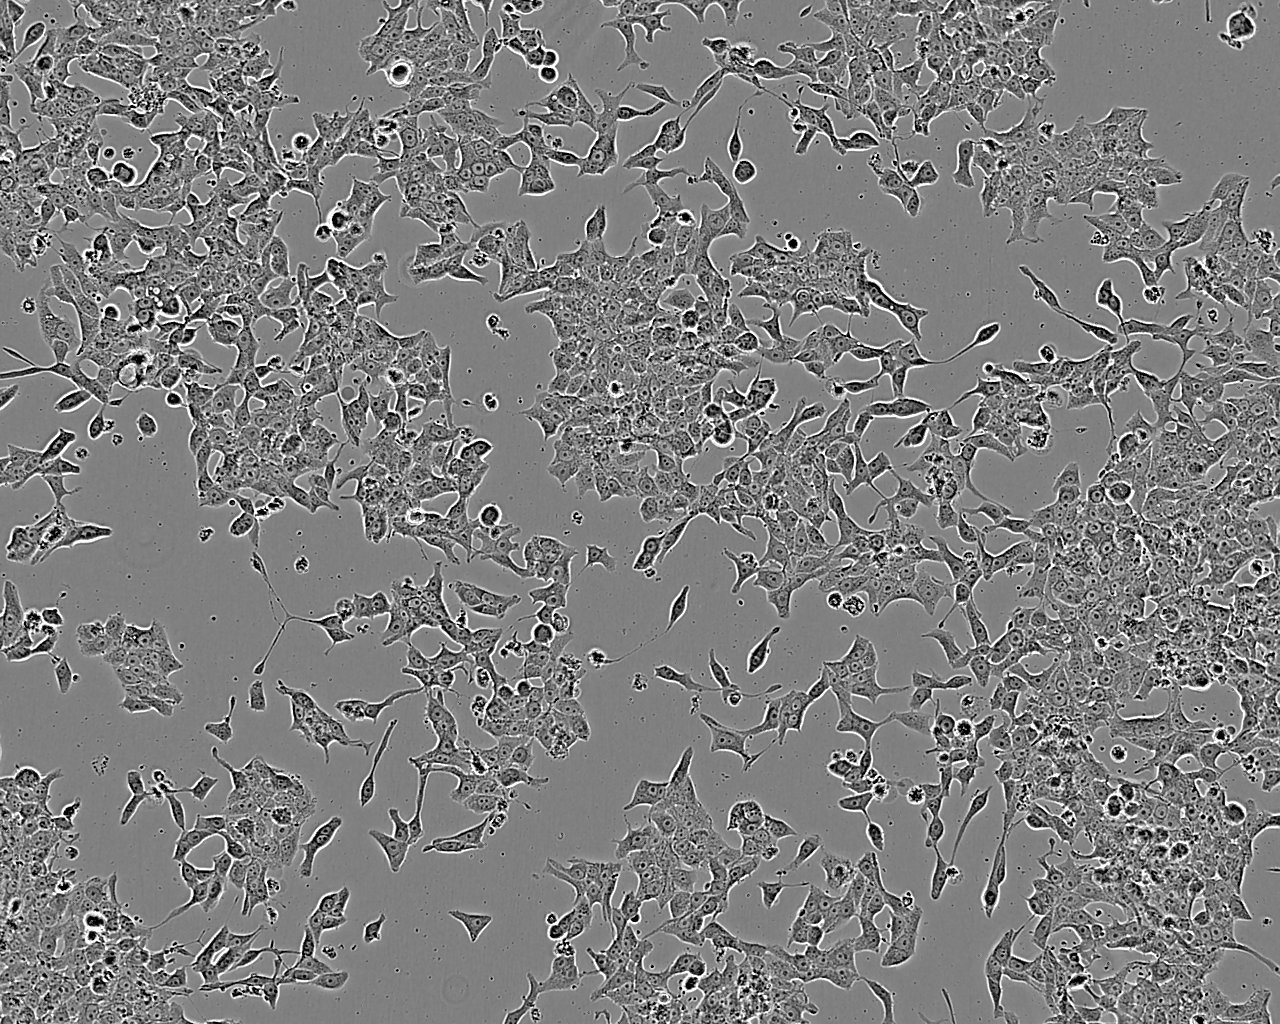 NCI-H1623 Cells|人非小细胞肺癌细胞系,NCI-H1623 Cells